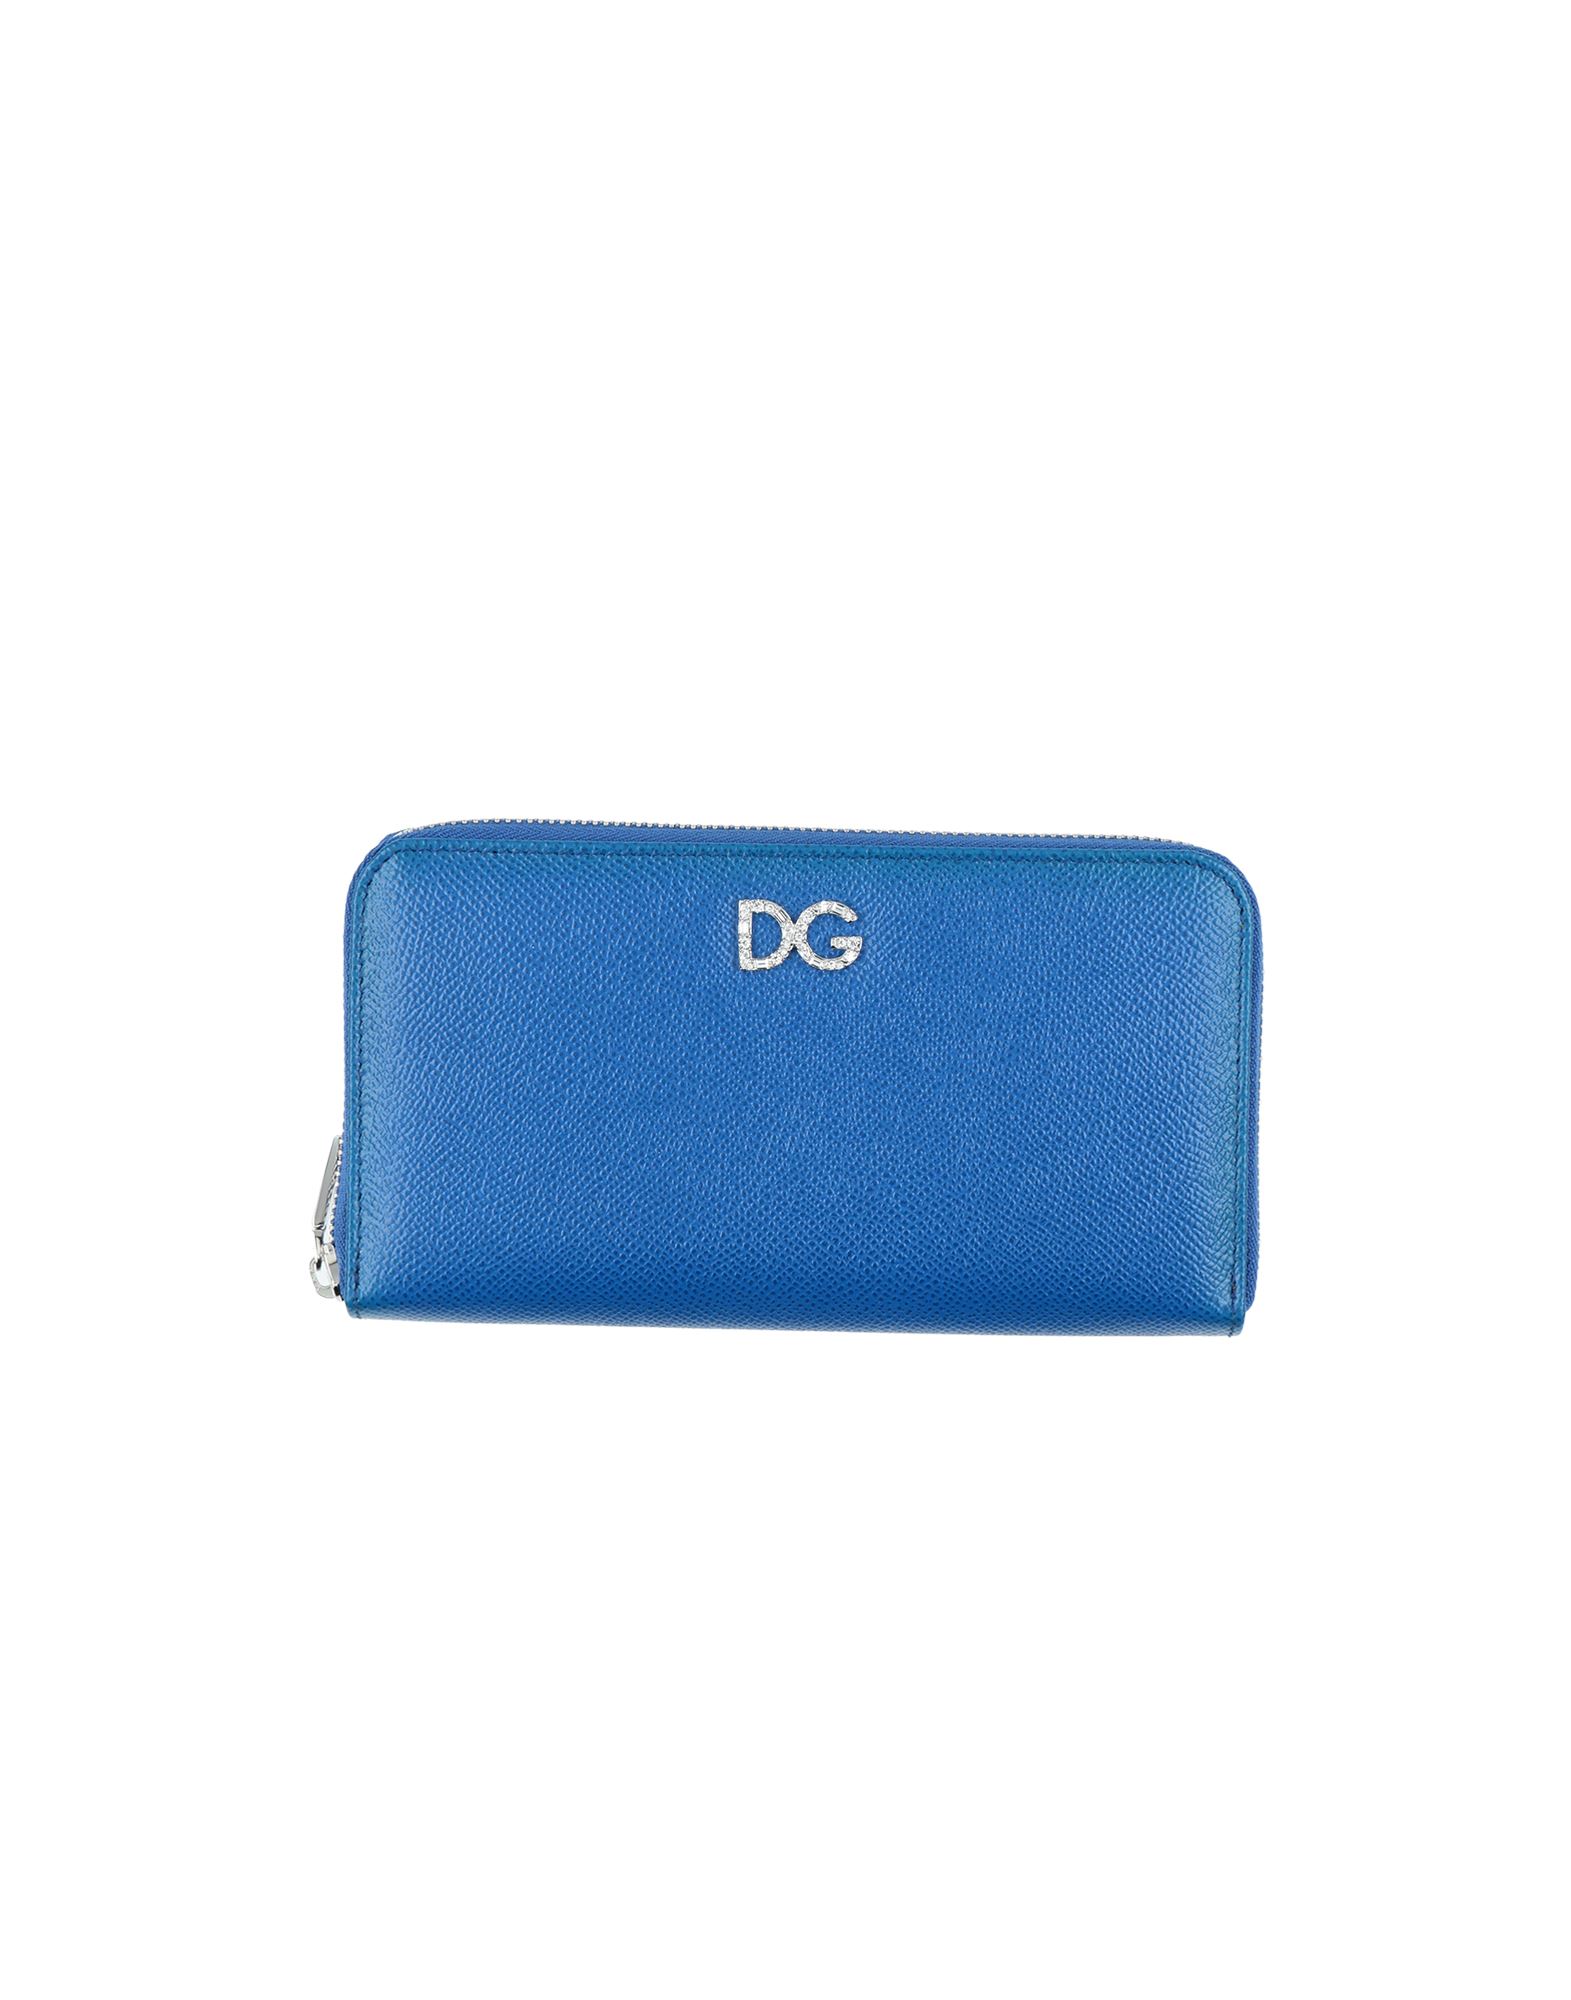 Dolce & Gabbana Wallets In Bright Blue